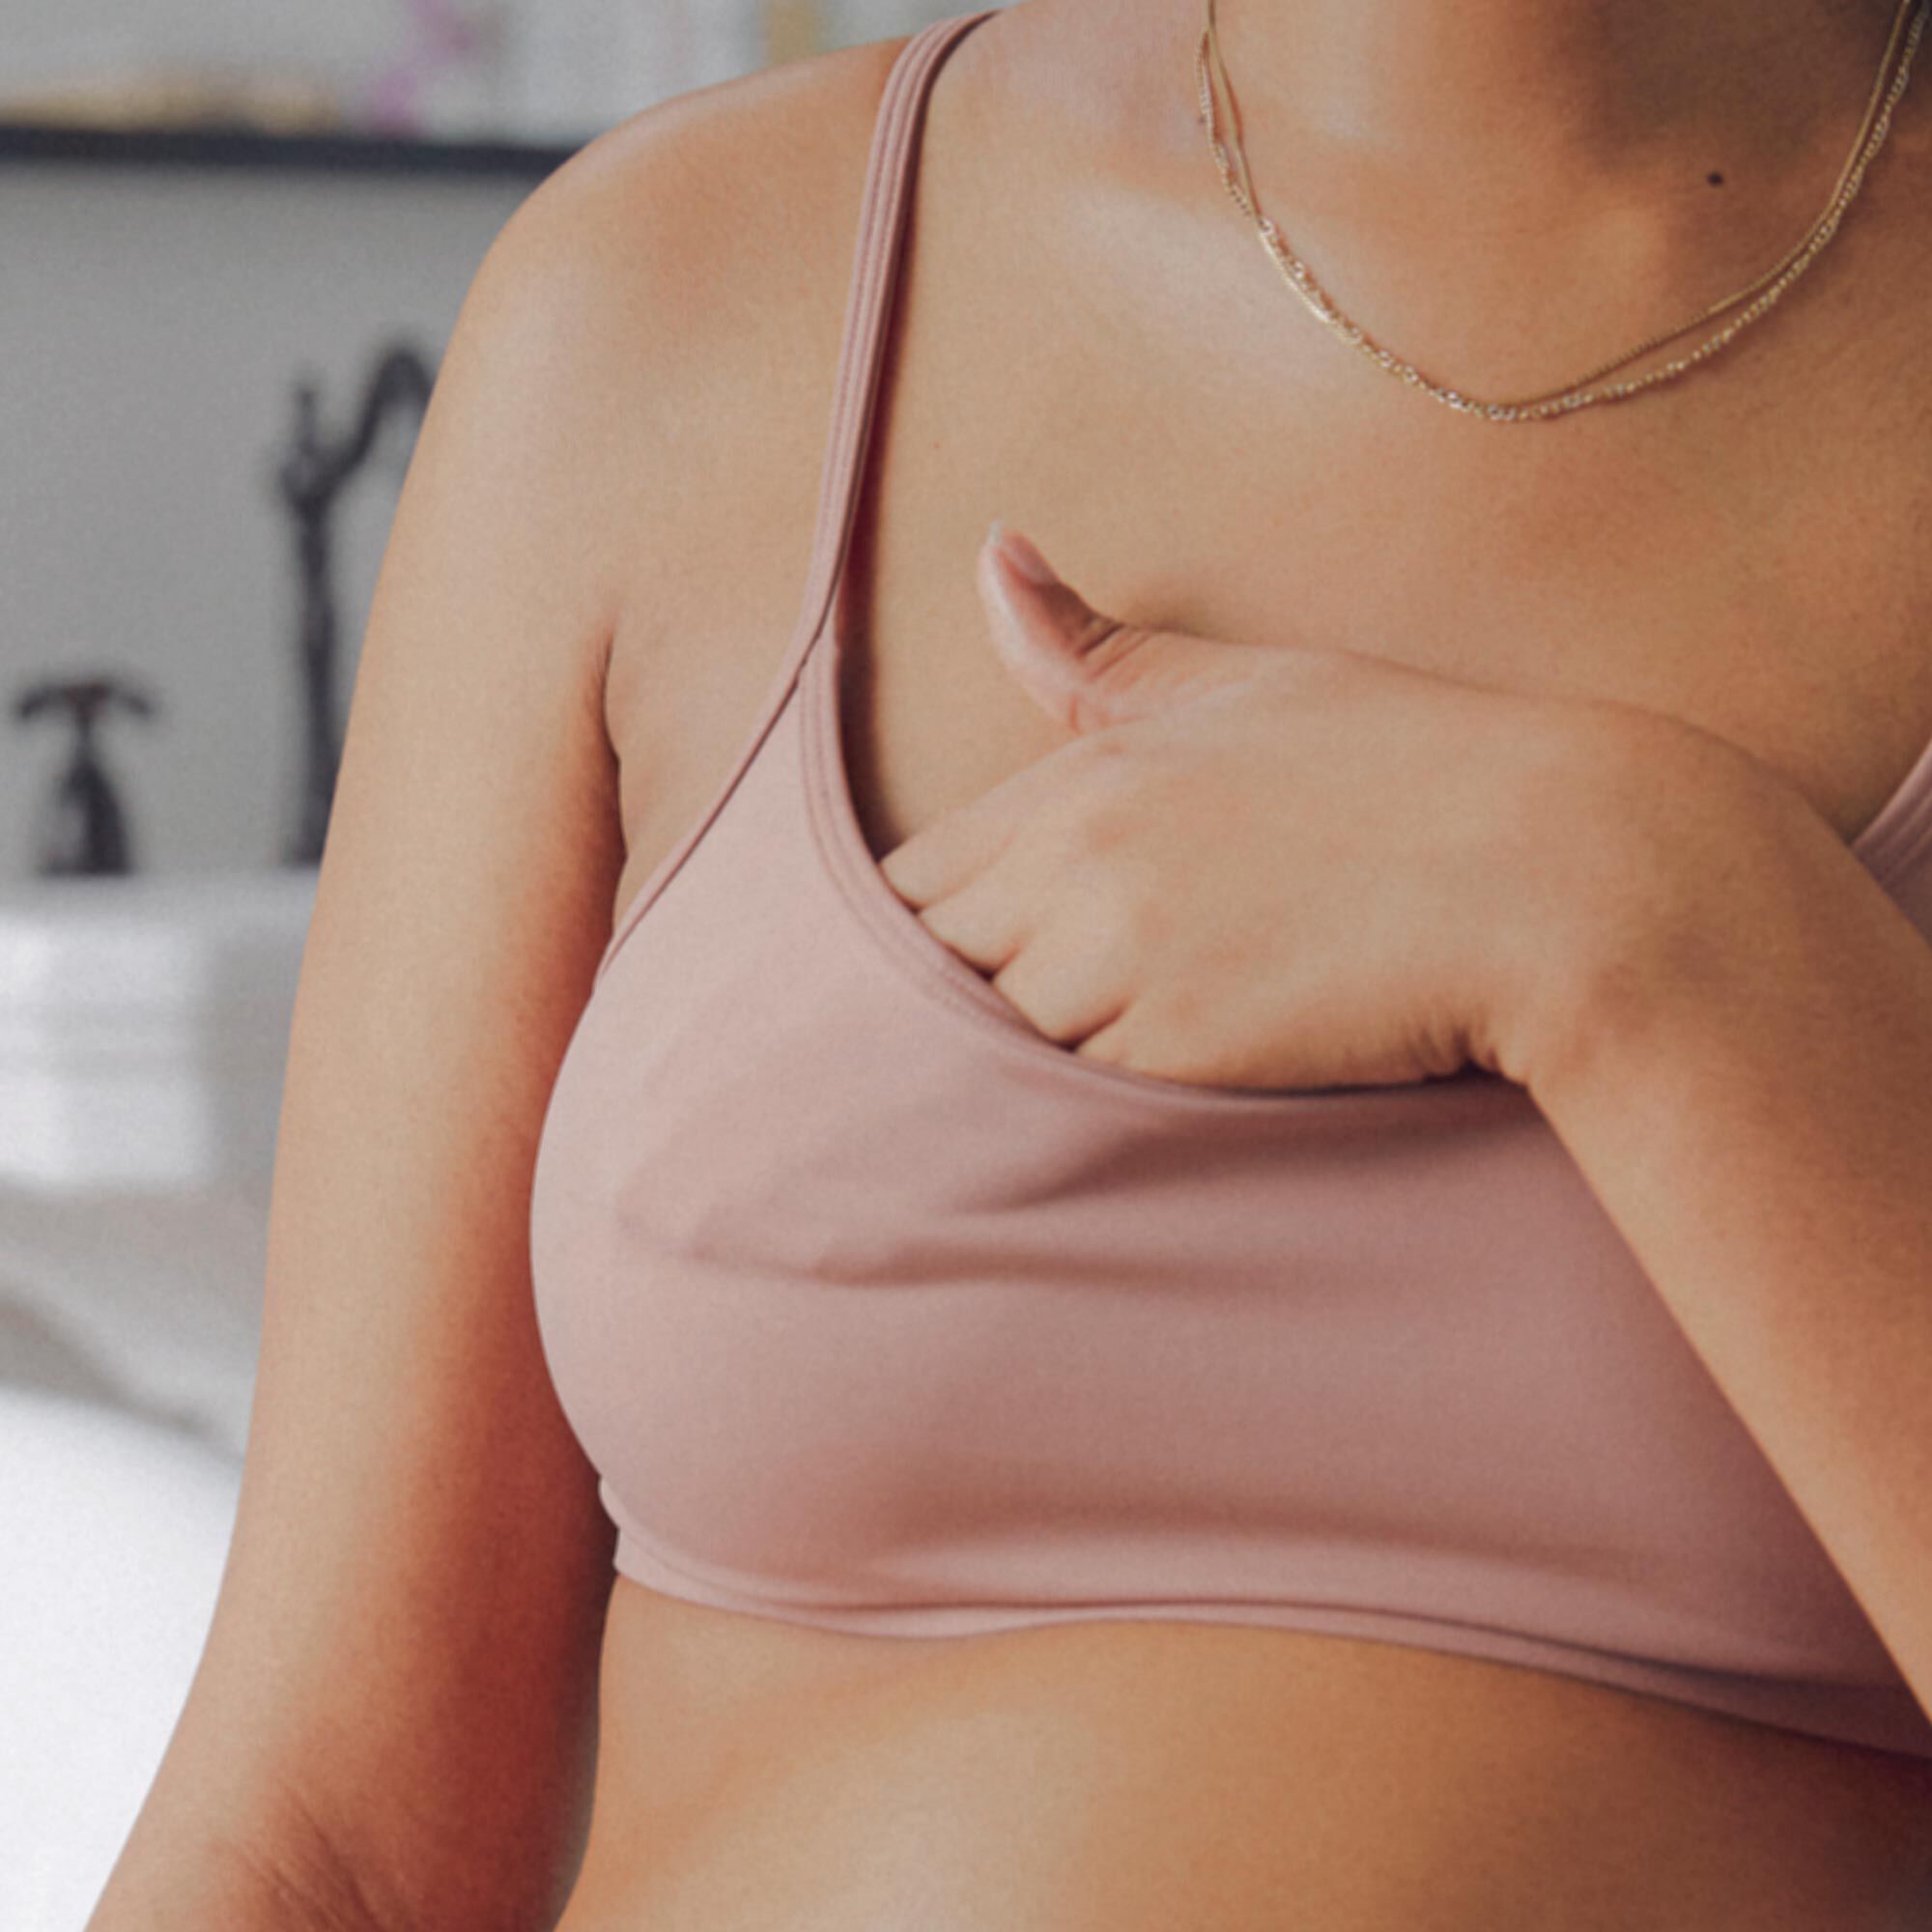 Pregnant mom applying nipple cream